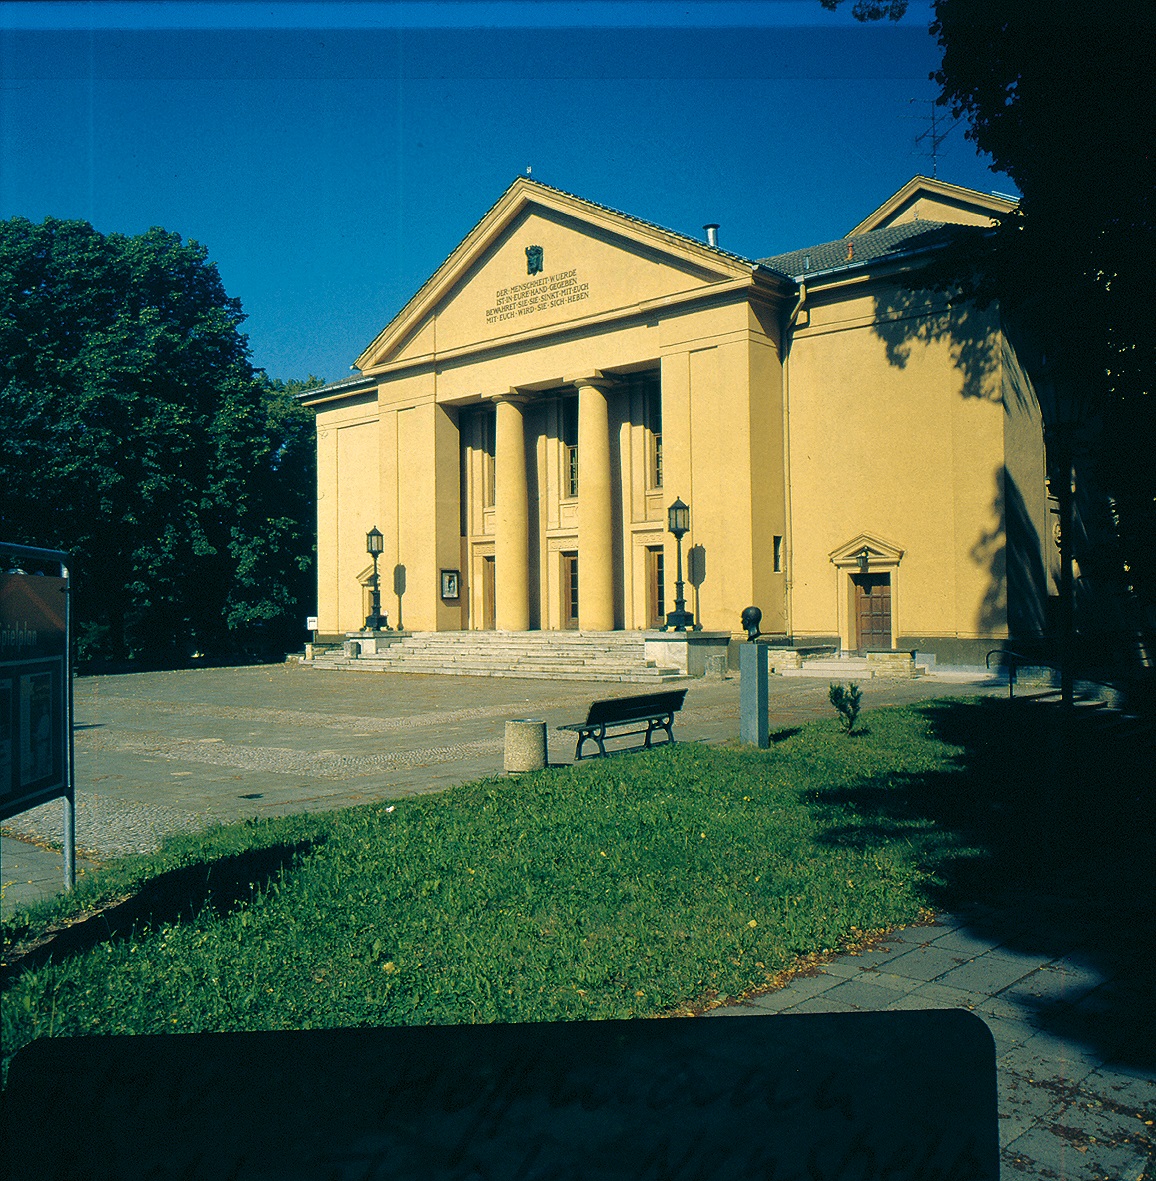 Das Landestheater Neustrelitz am Rande des Schlossparks.
